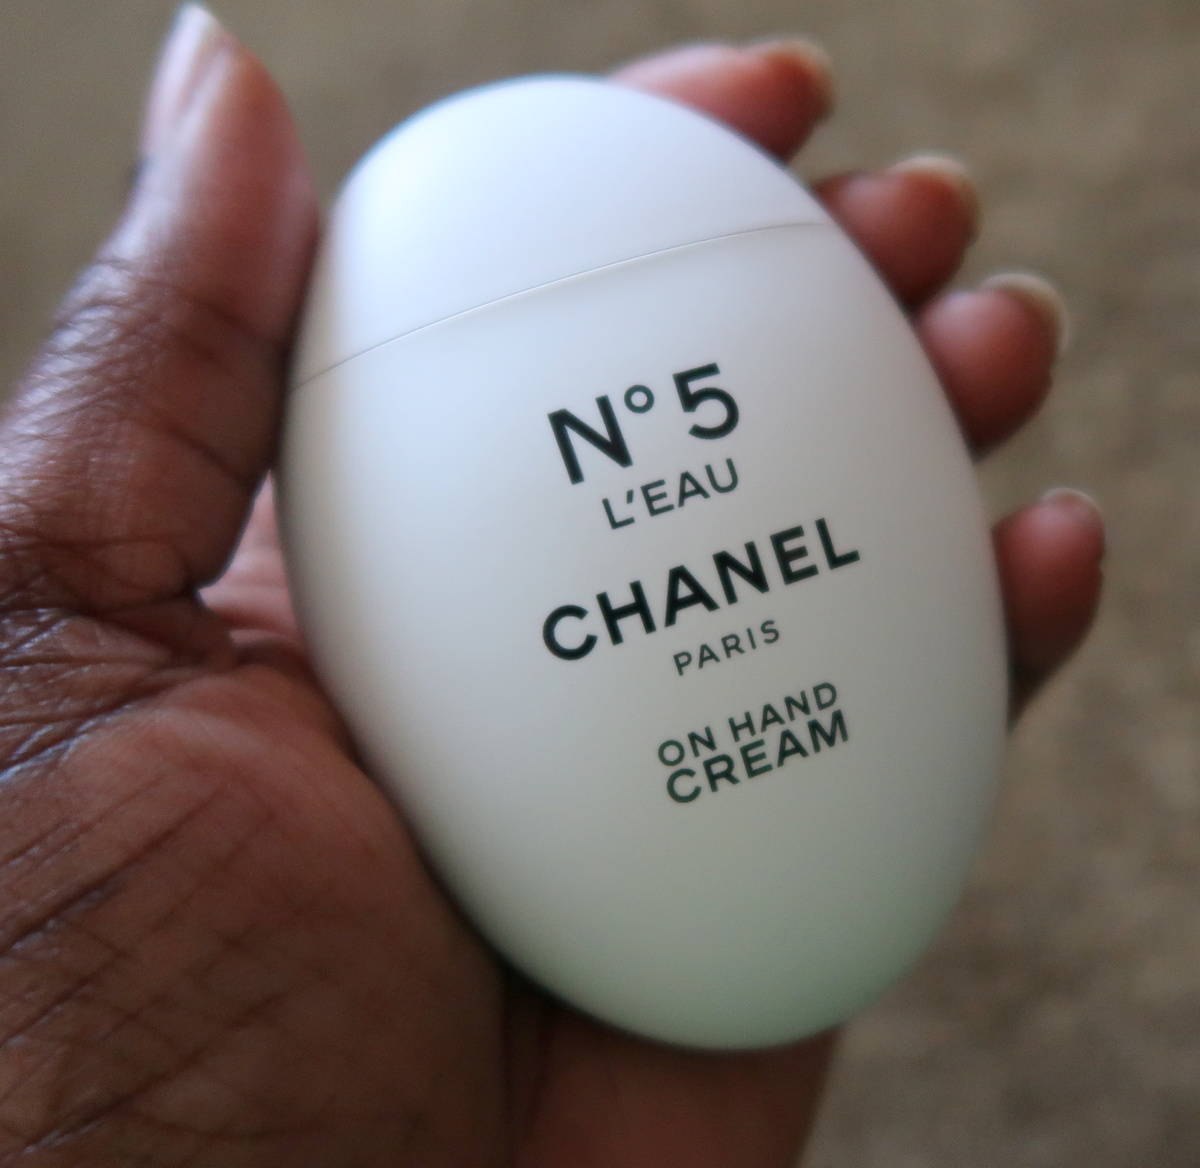 Chanel No 5 L'Eau: On Hand Cream - Patent Purple Beauty Blog